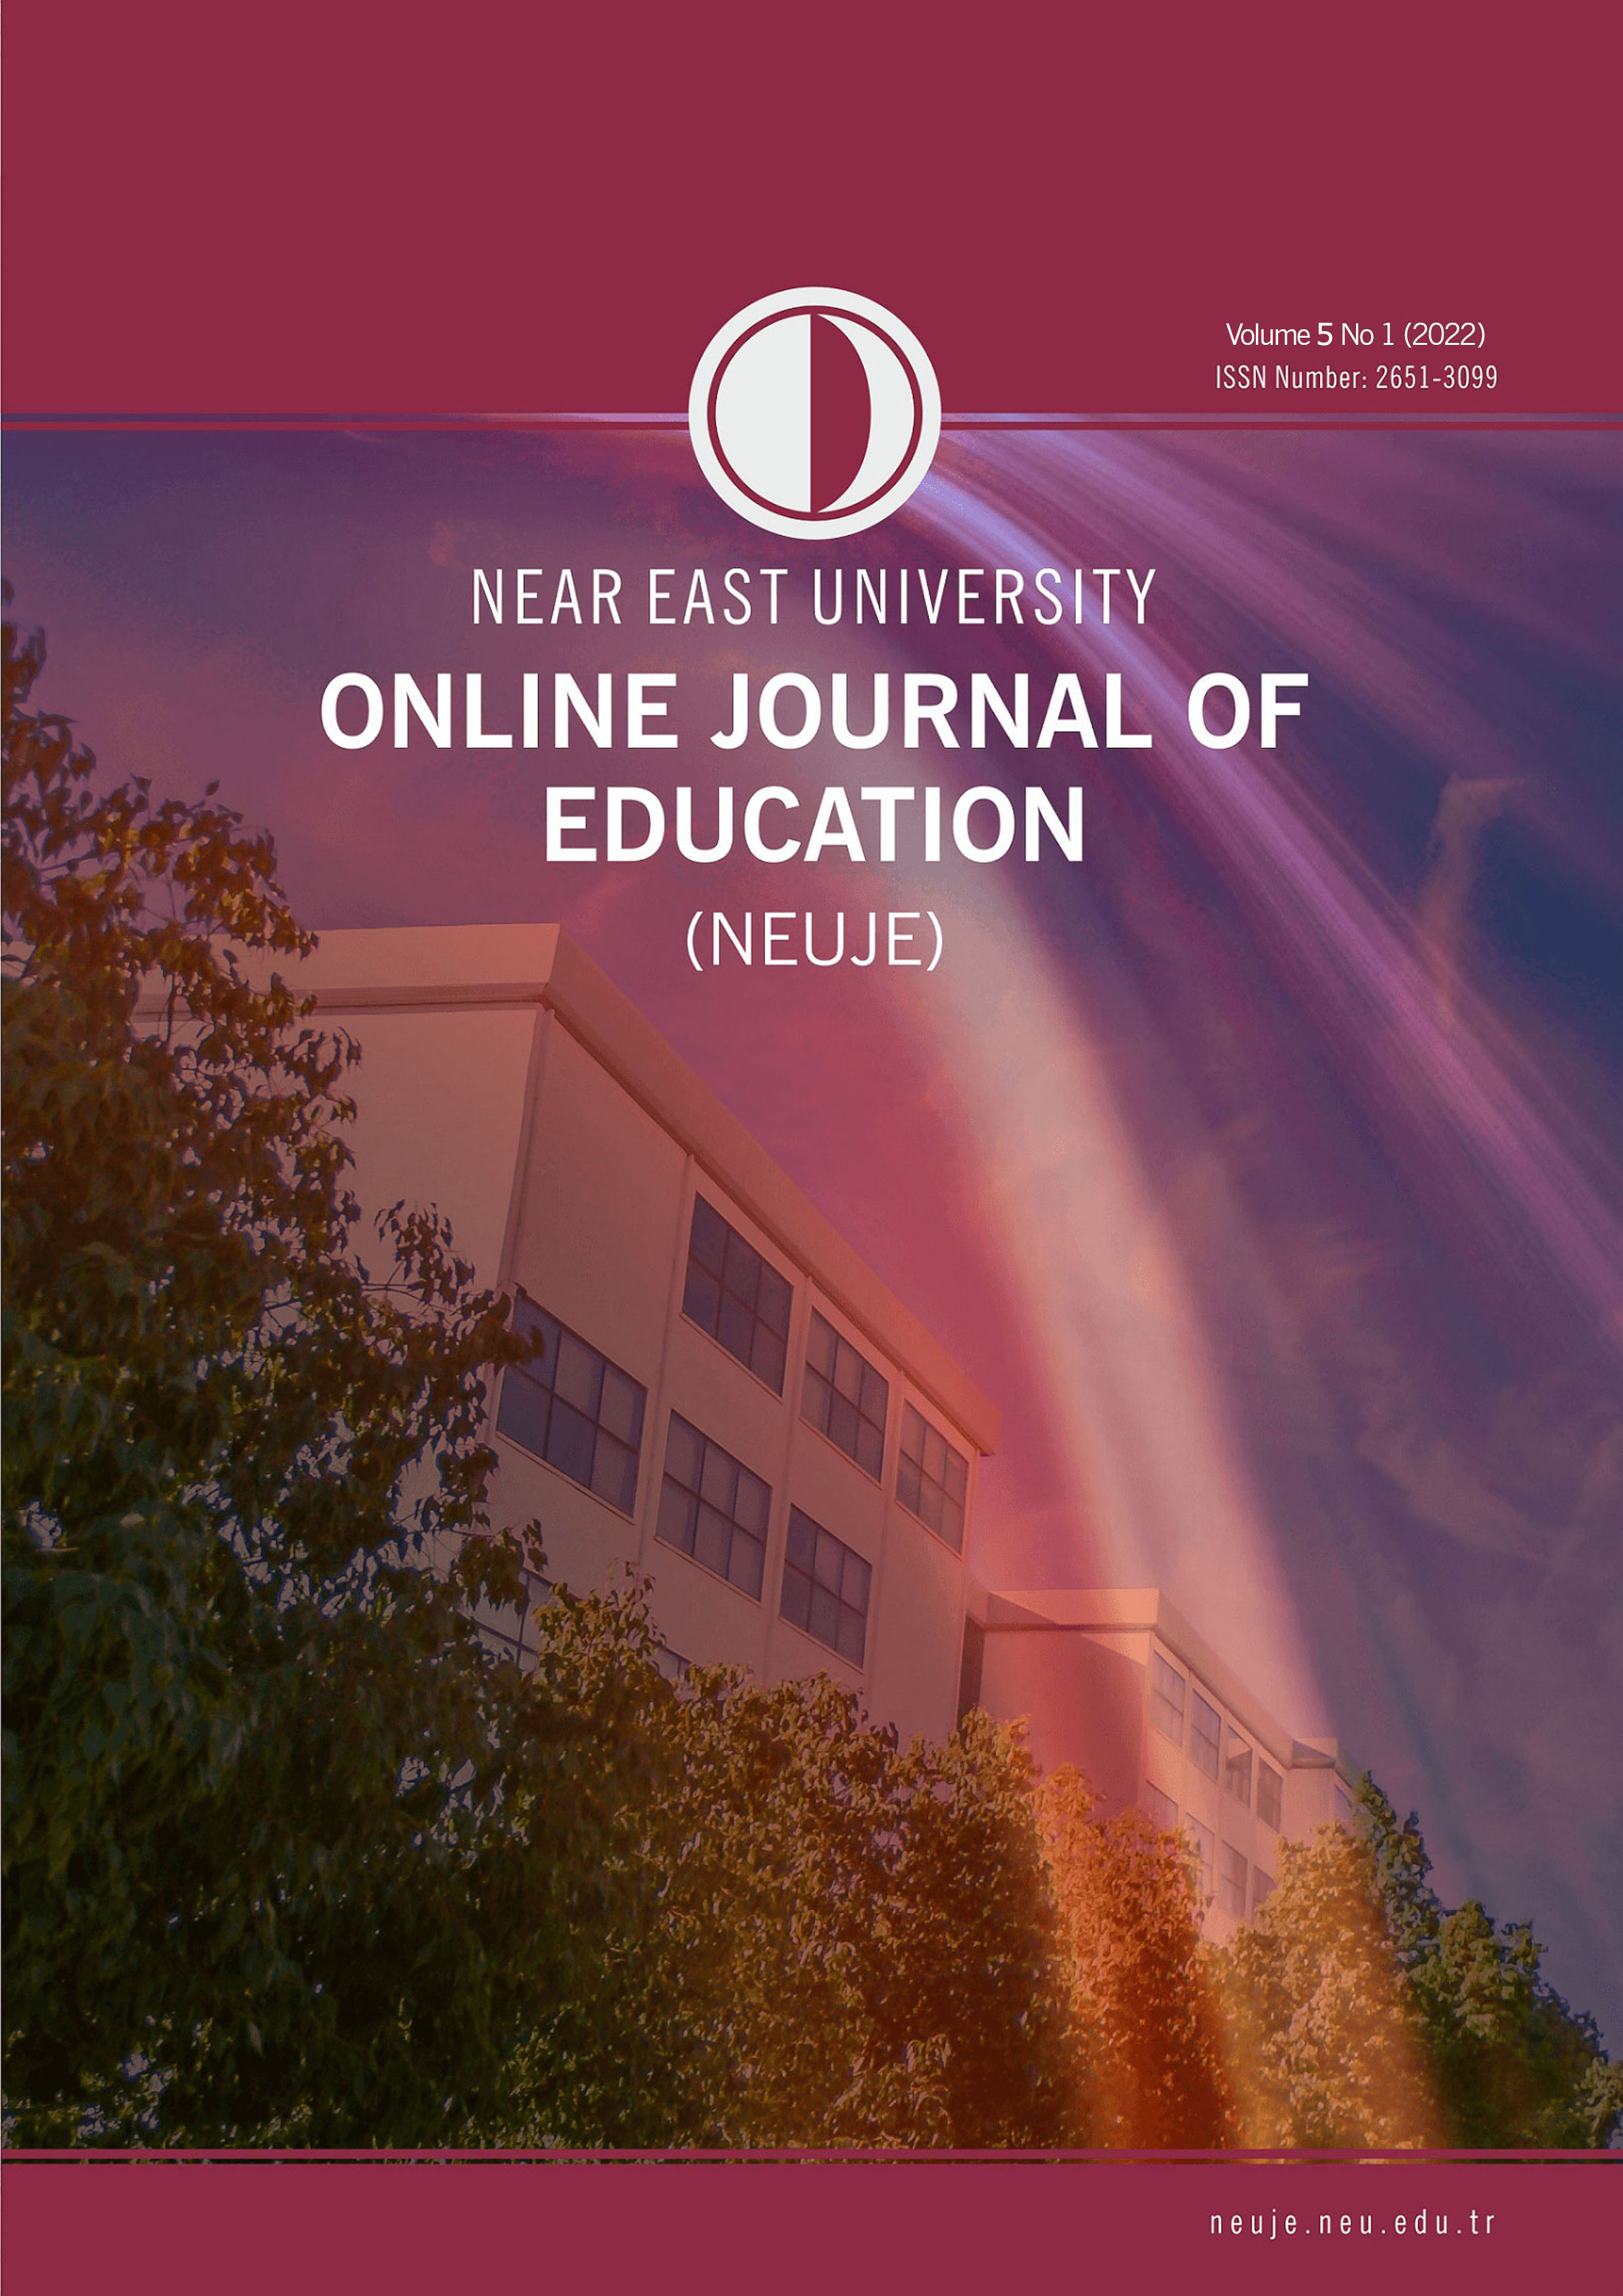 					View Vol. 5 No. 1 (2022): Near East University Online Journal of Education - NEUJE
				